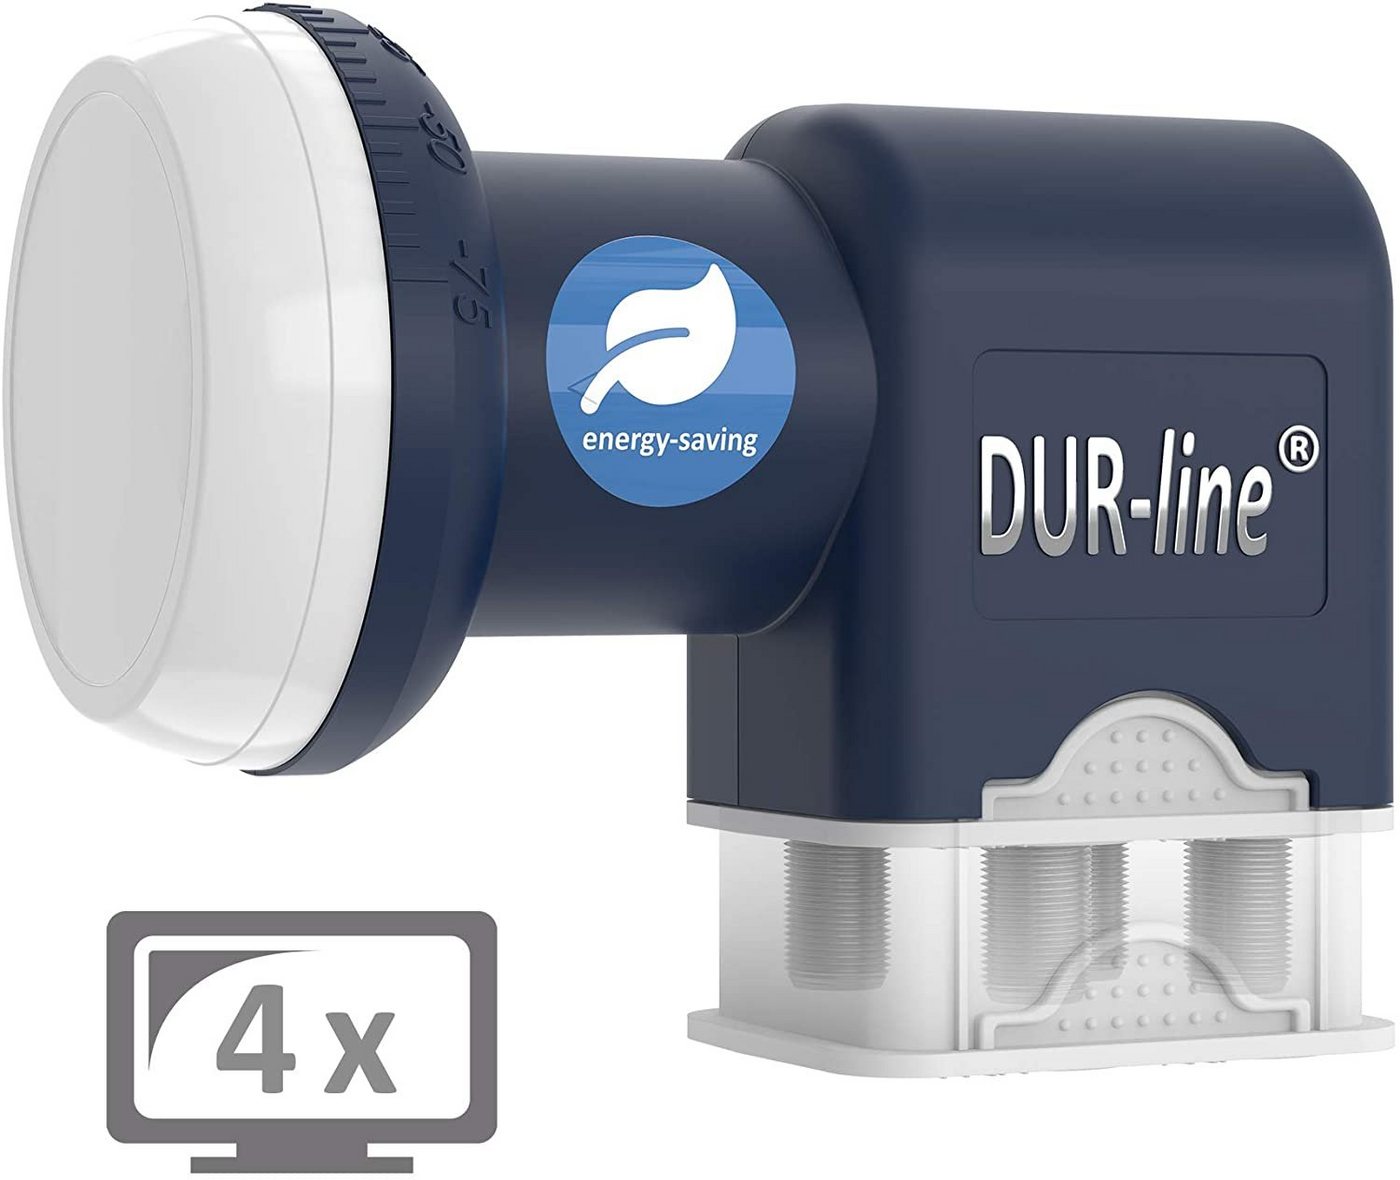 DUR-line DUR-line Blue ECO Quad - Stromspar-LNB - 4 Teilnehmer - Premium-Qualit Universal-Quad-LNB von DUR-line